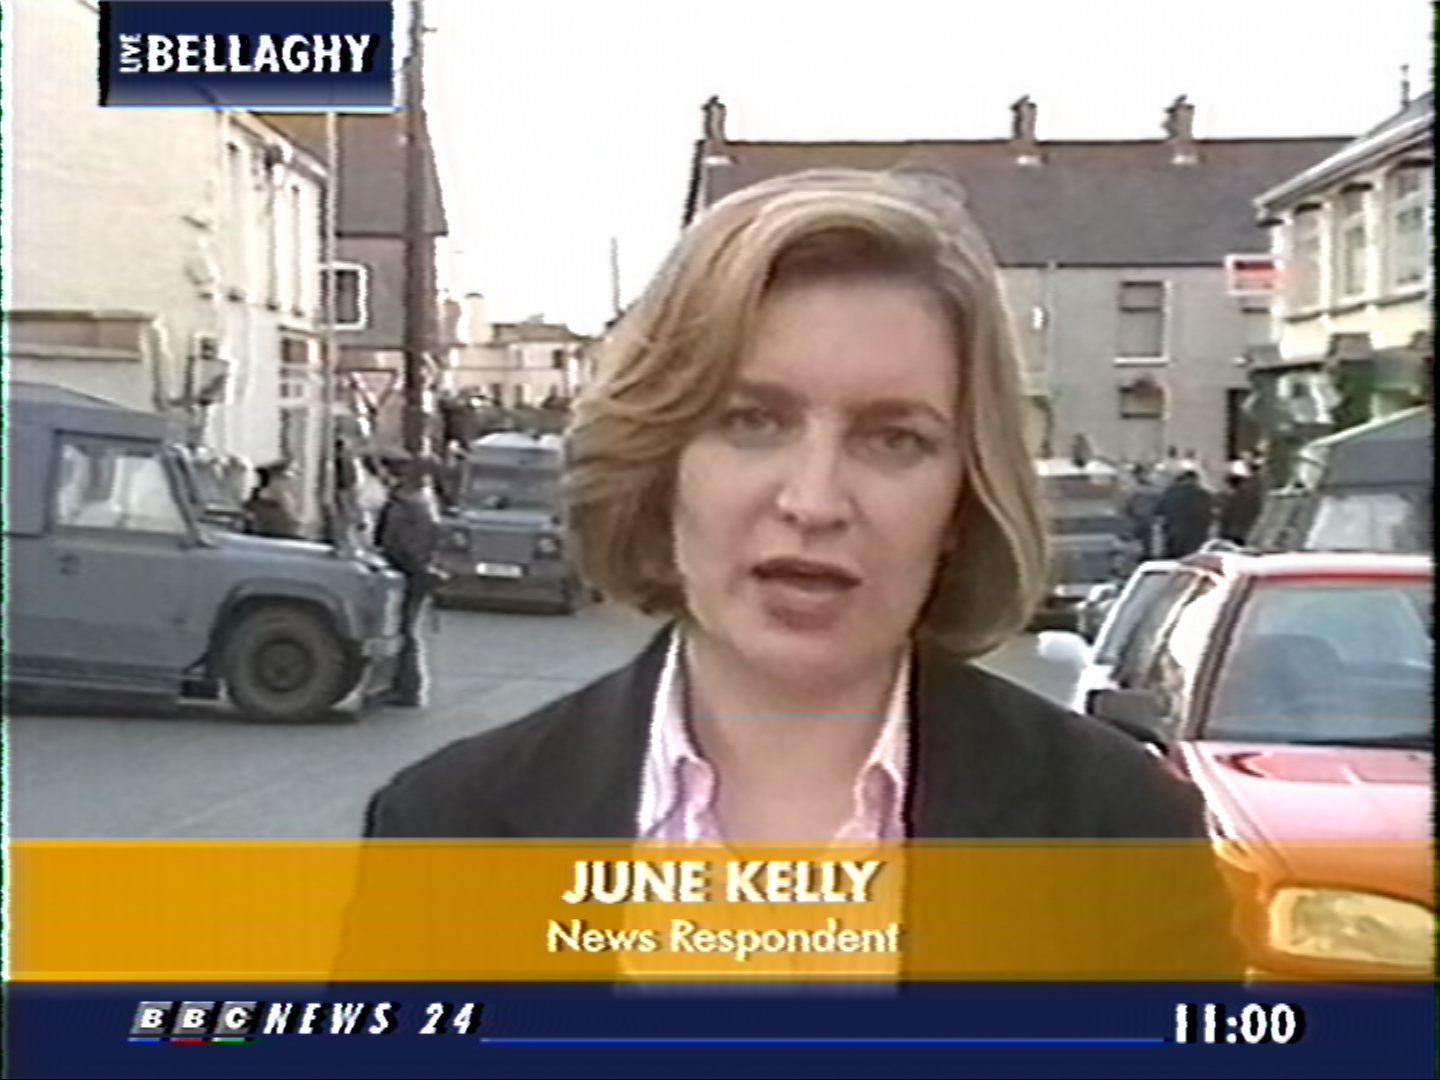 BBC News 24 L3s (cir. 1997)